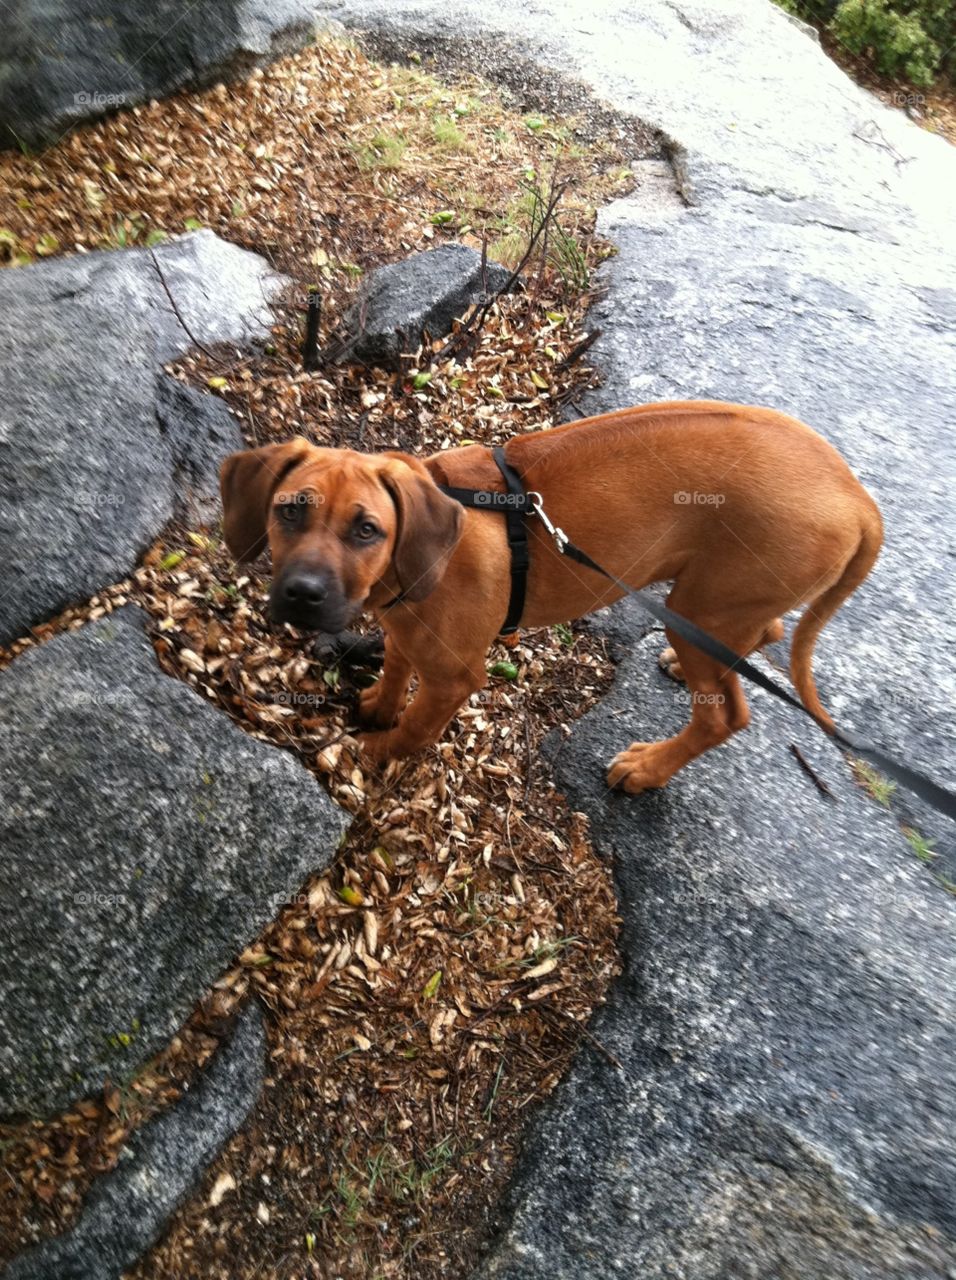 Zuri on rocks. My dog Zuri on some rocks